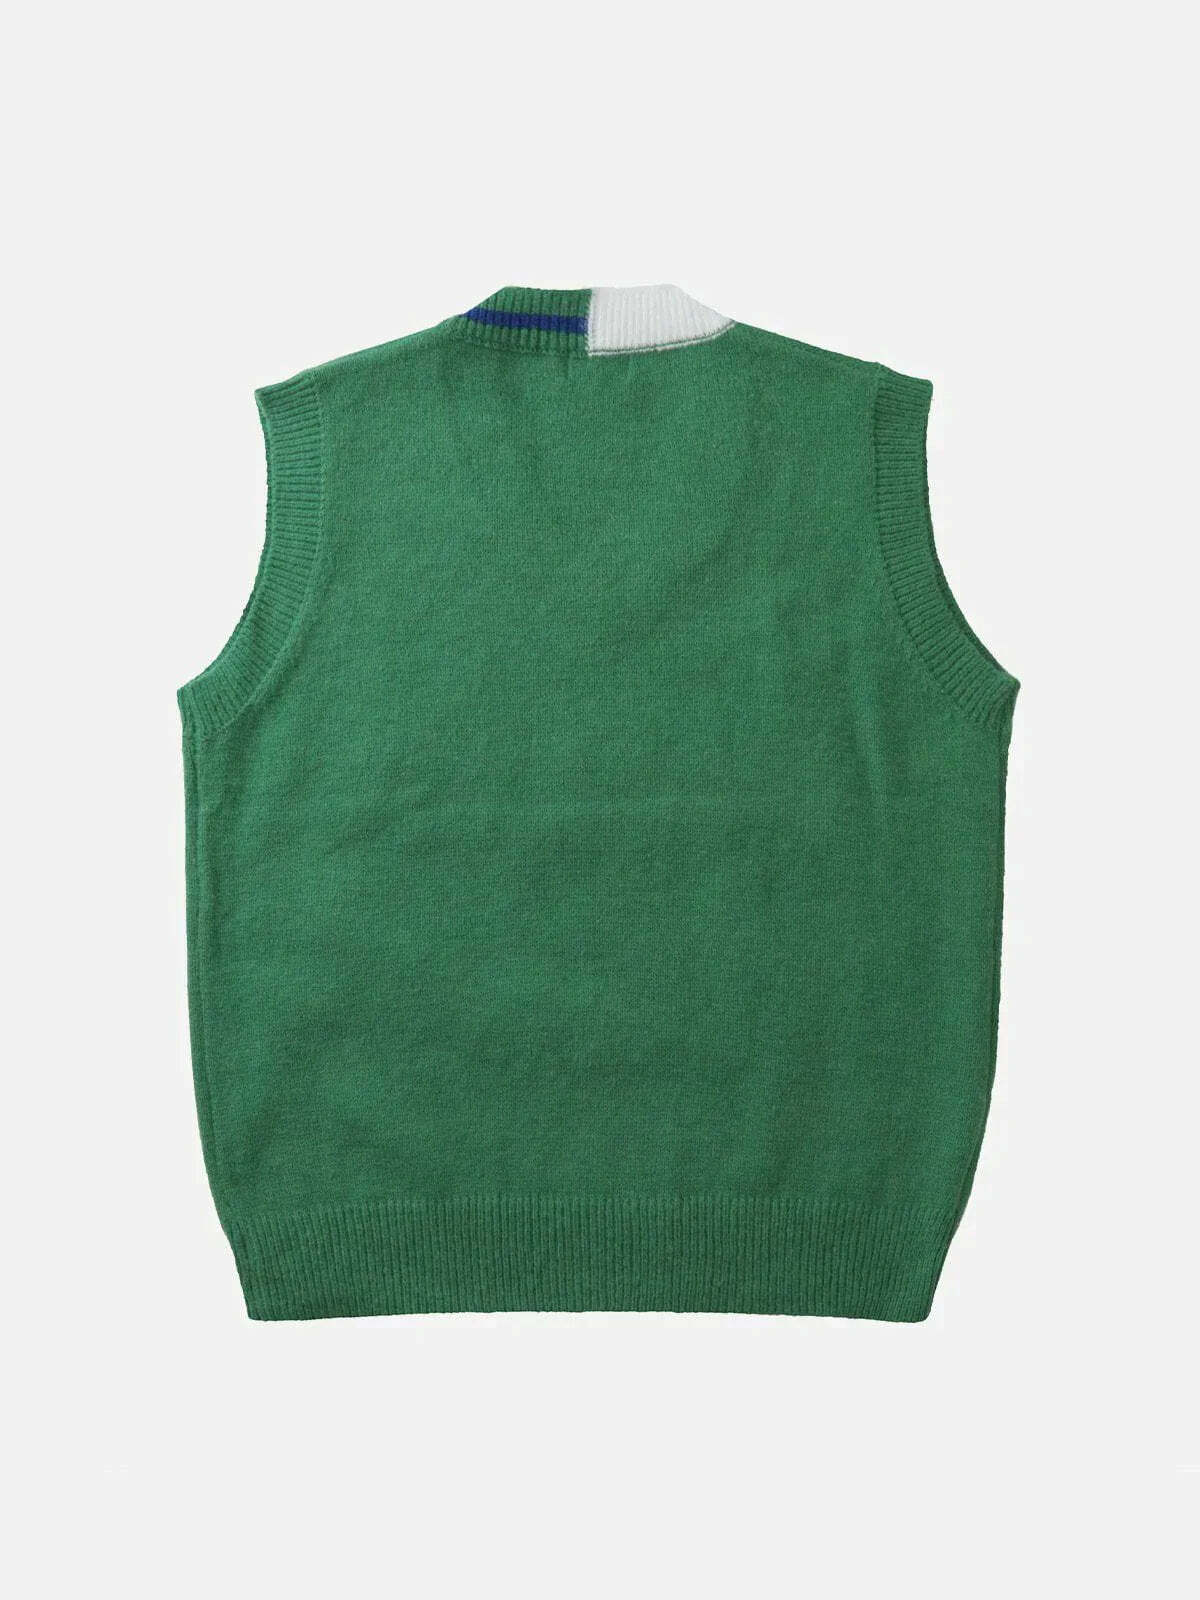 colorblock letter sweater vest edgy & vibrant streetwear 7285